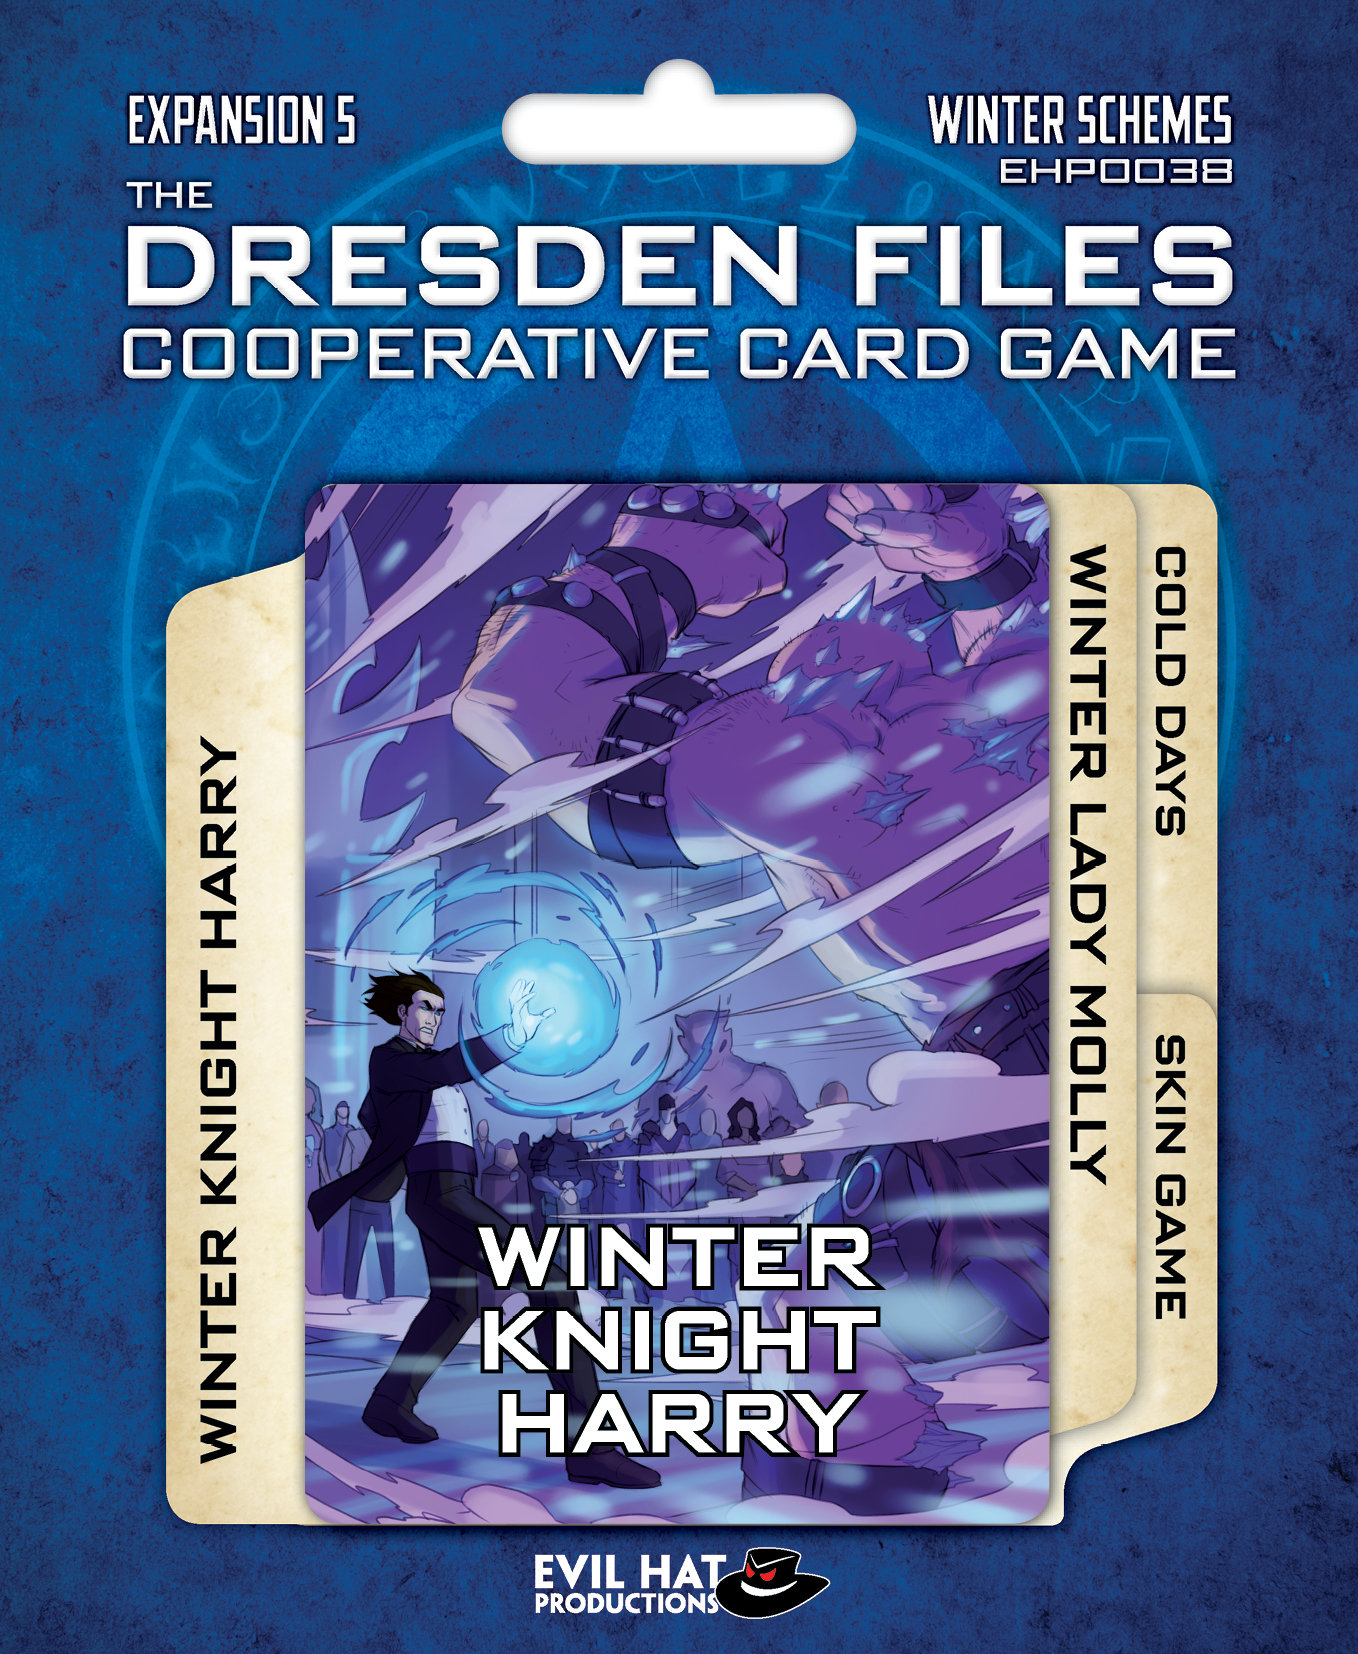 The Dresden Files Co-op Card Game: Winter Schemes